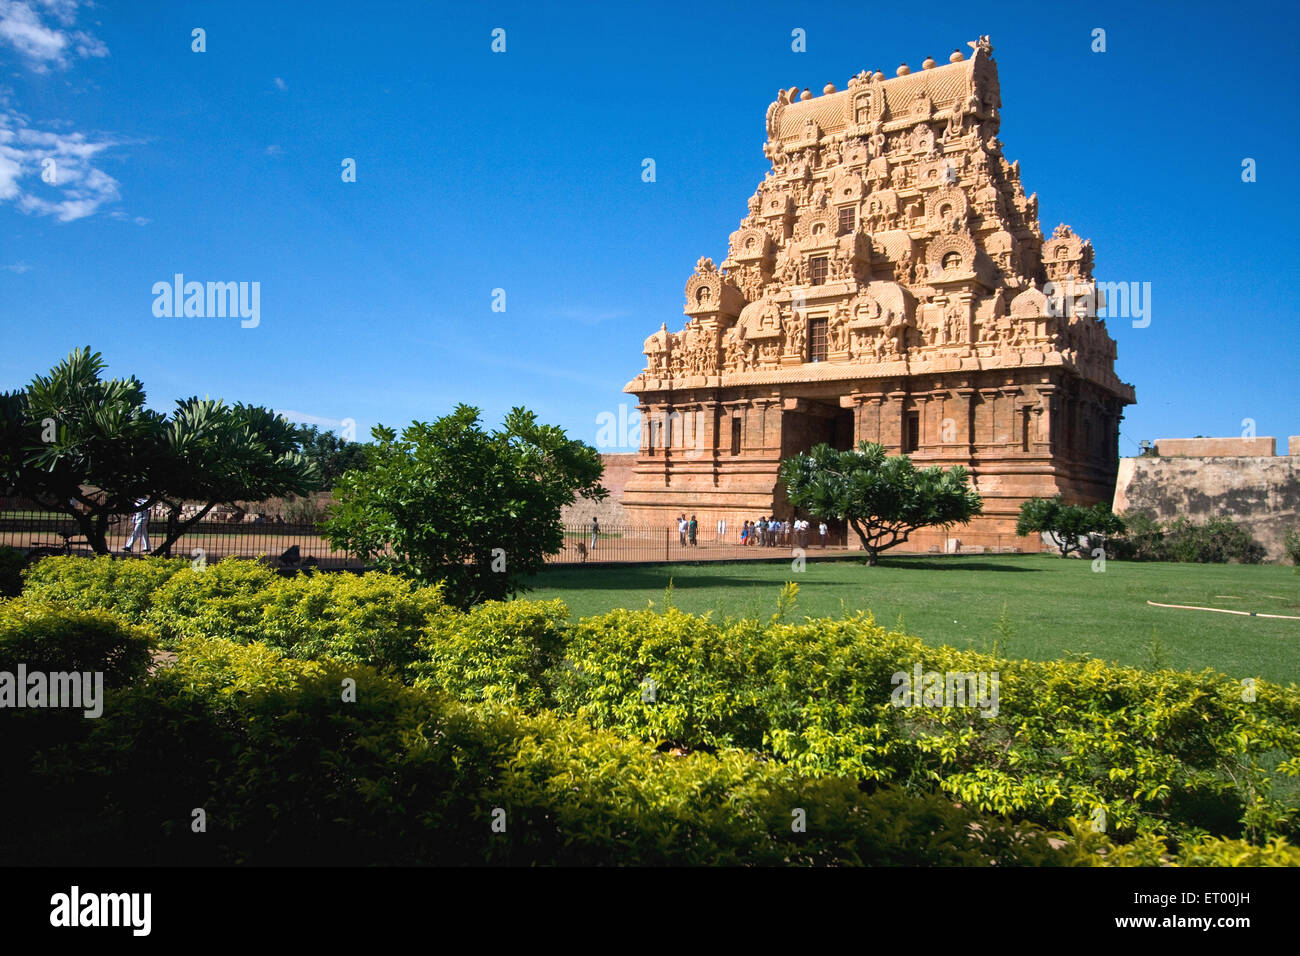 Ingresso, Tempio di Brihadisvara, Tempio di Brihadisvara, Tempio di Rajarajesvaram, Tempio di Brihadeeswara, Peruvudaiyar Kovil, Thanjavur, Tamil Nadu, India Foto Stock